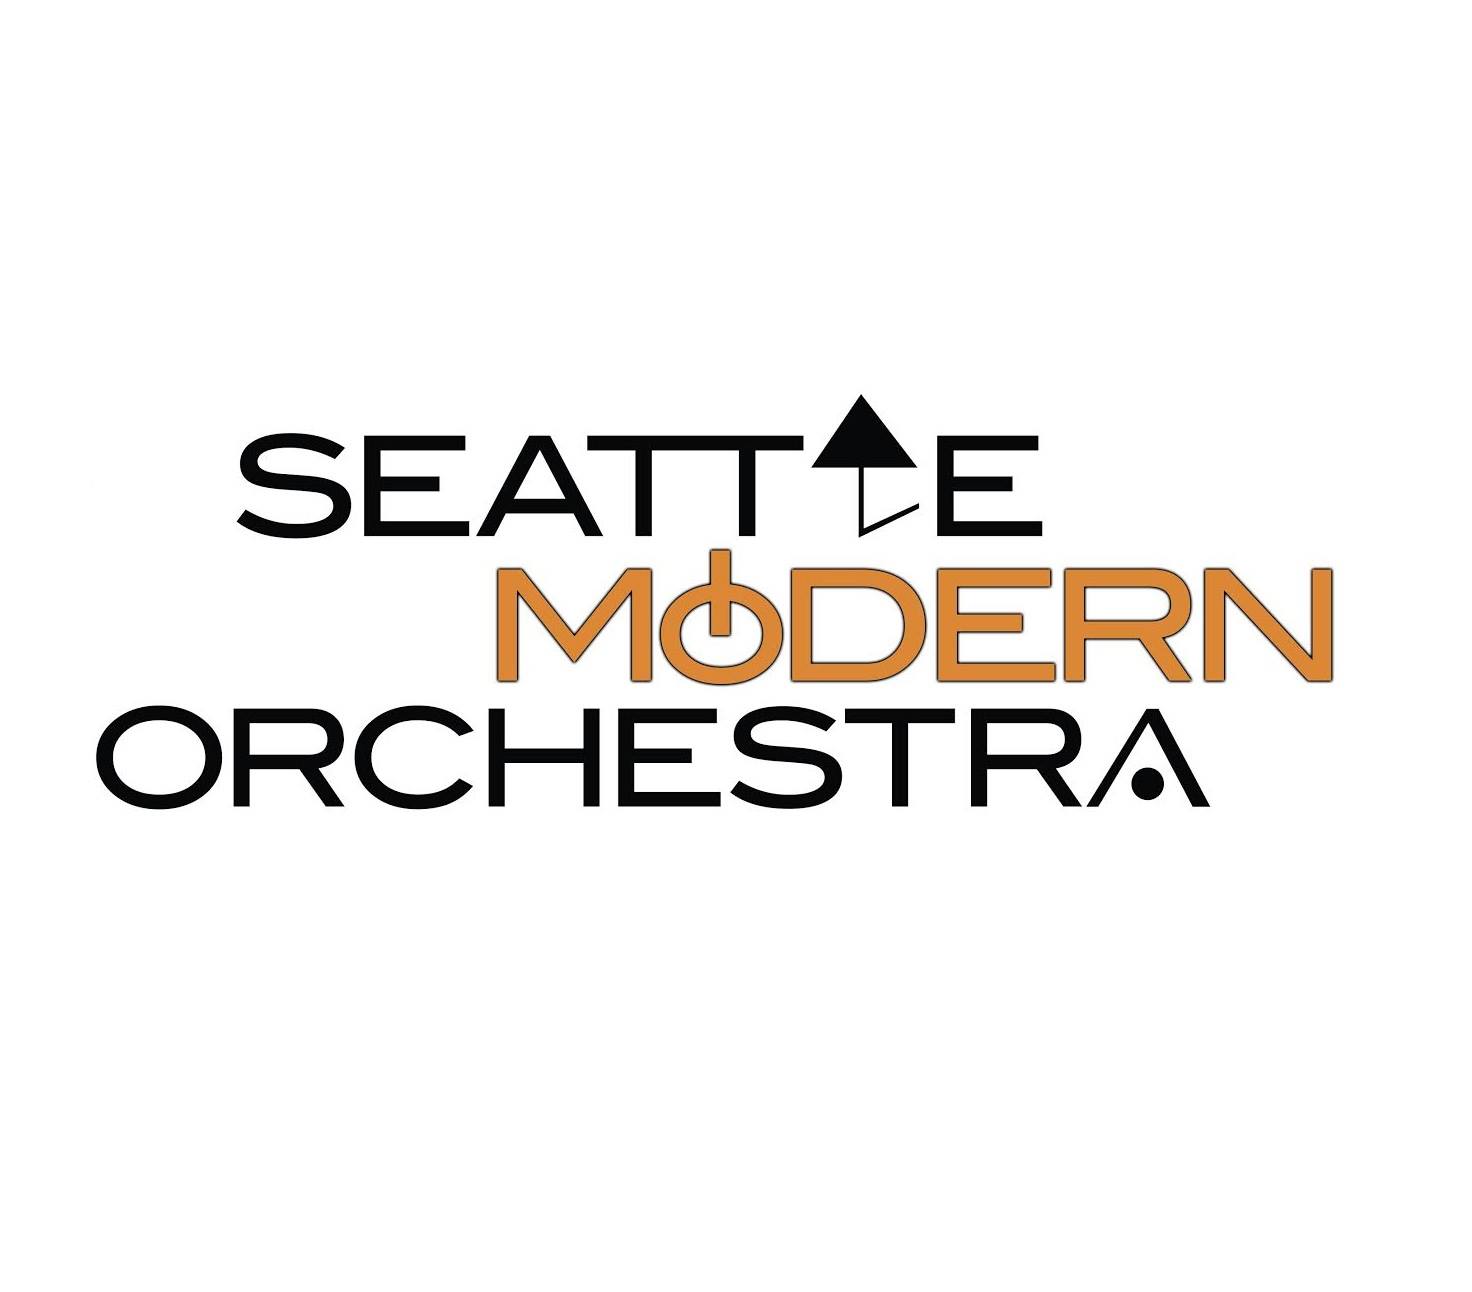 Seattle Modern Orchestra